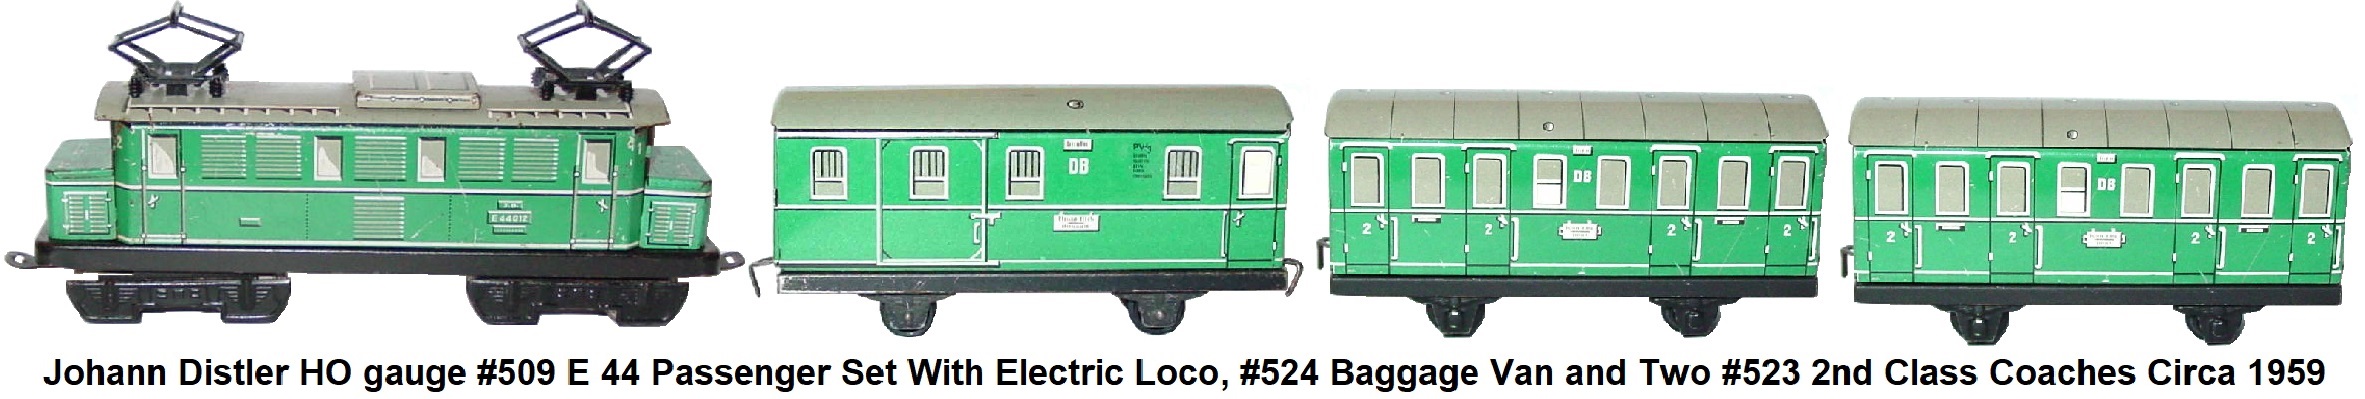 Johann Distler Nuremberg, HO gauge tinplate lithographed #509 Set with E 44 electric loco, #524 baggage van, 2 #523 2nd class passenger coaches circa 1959